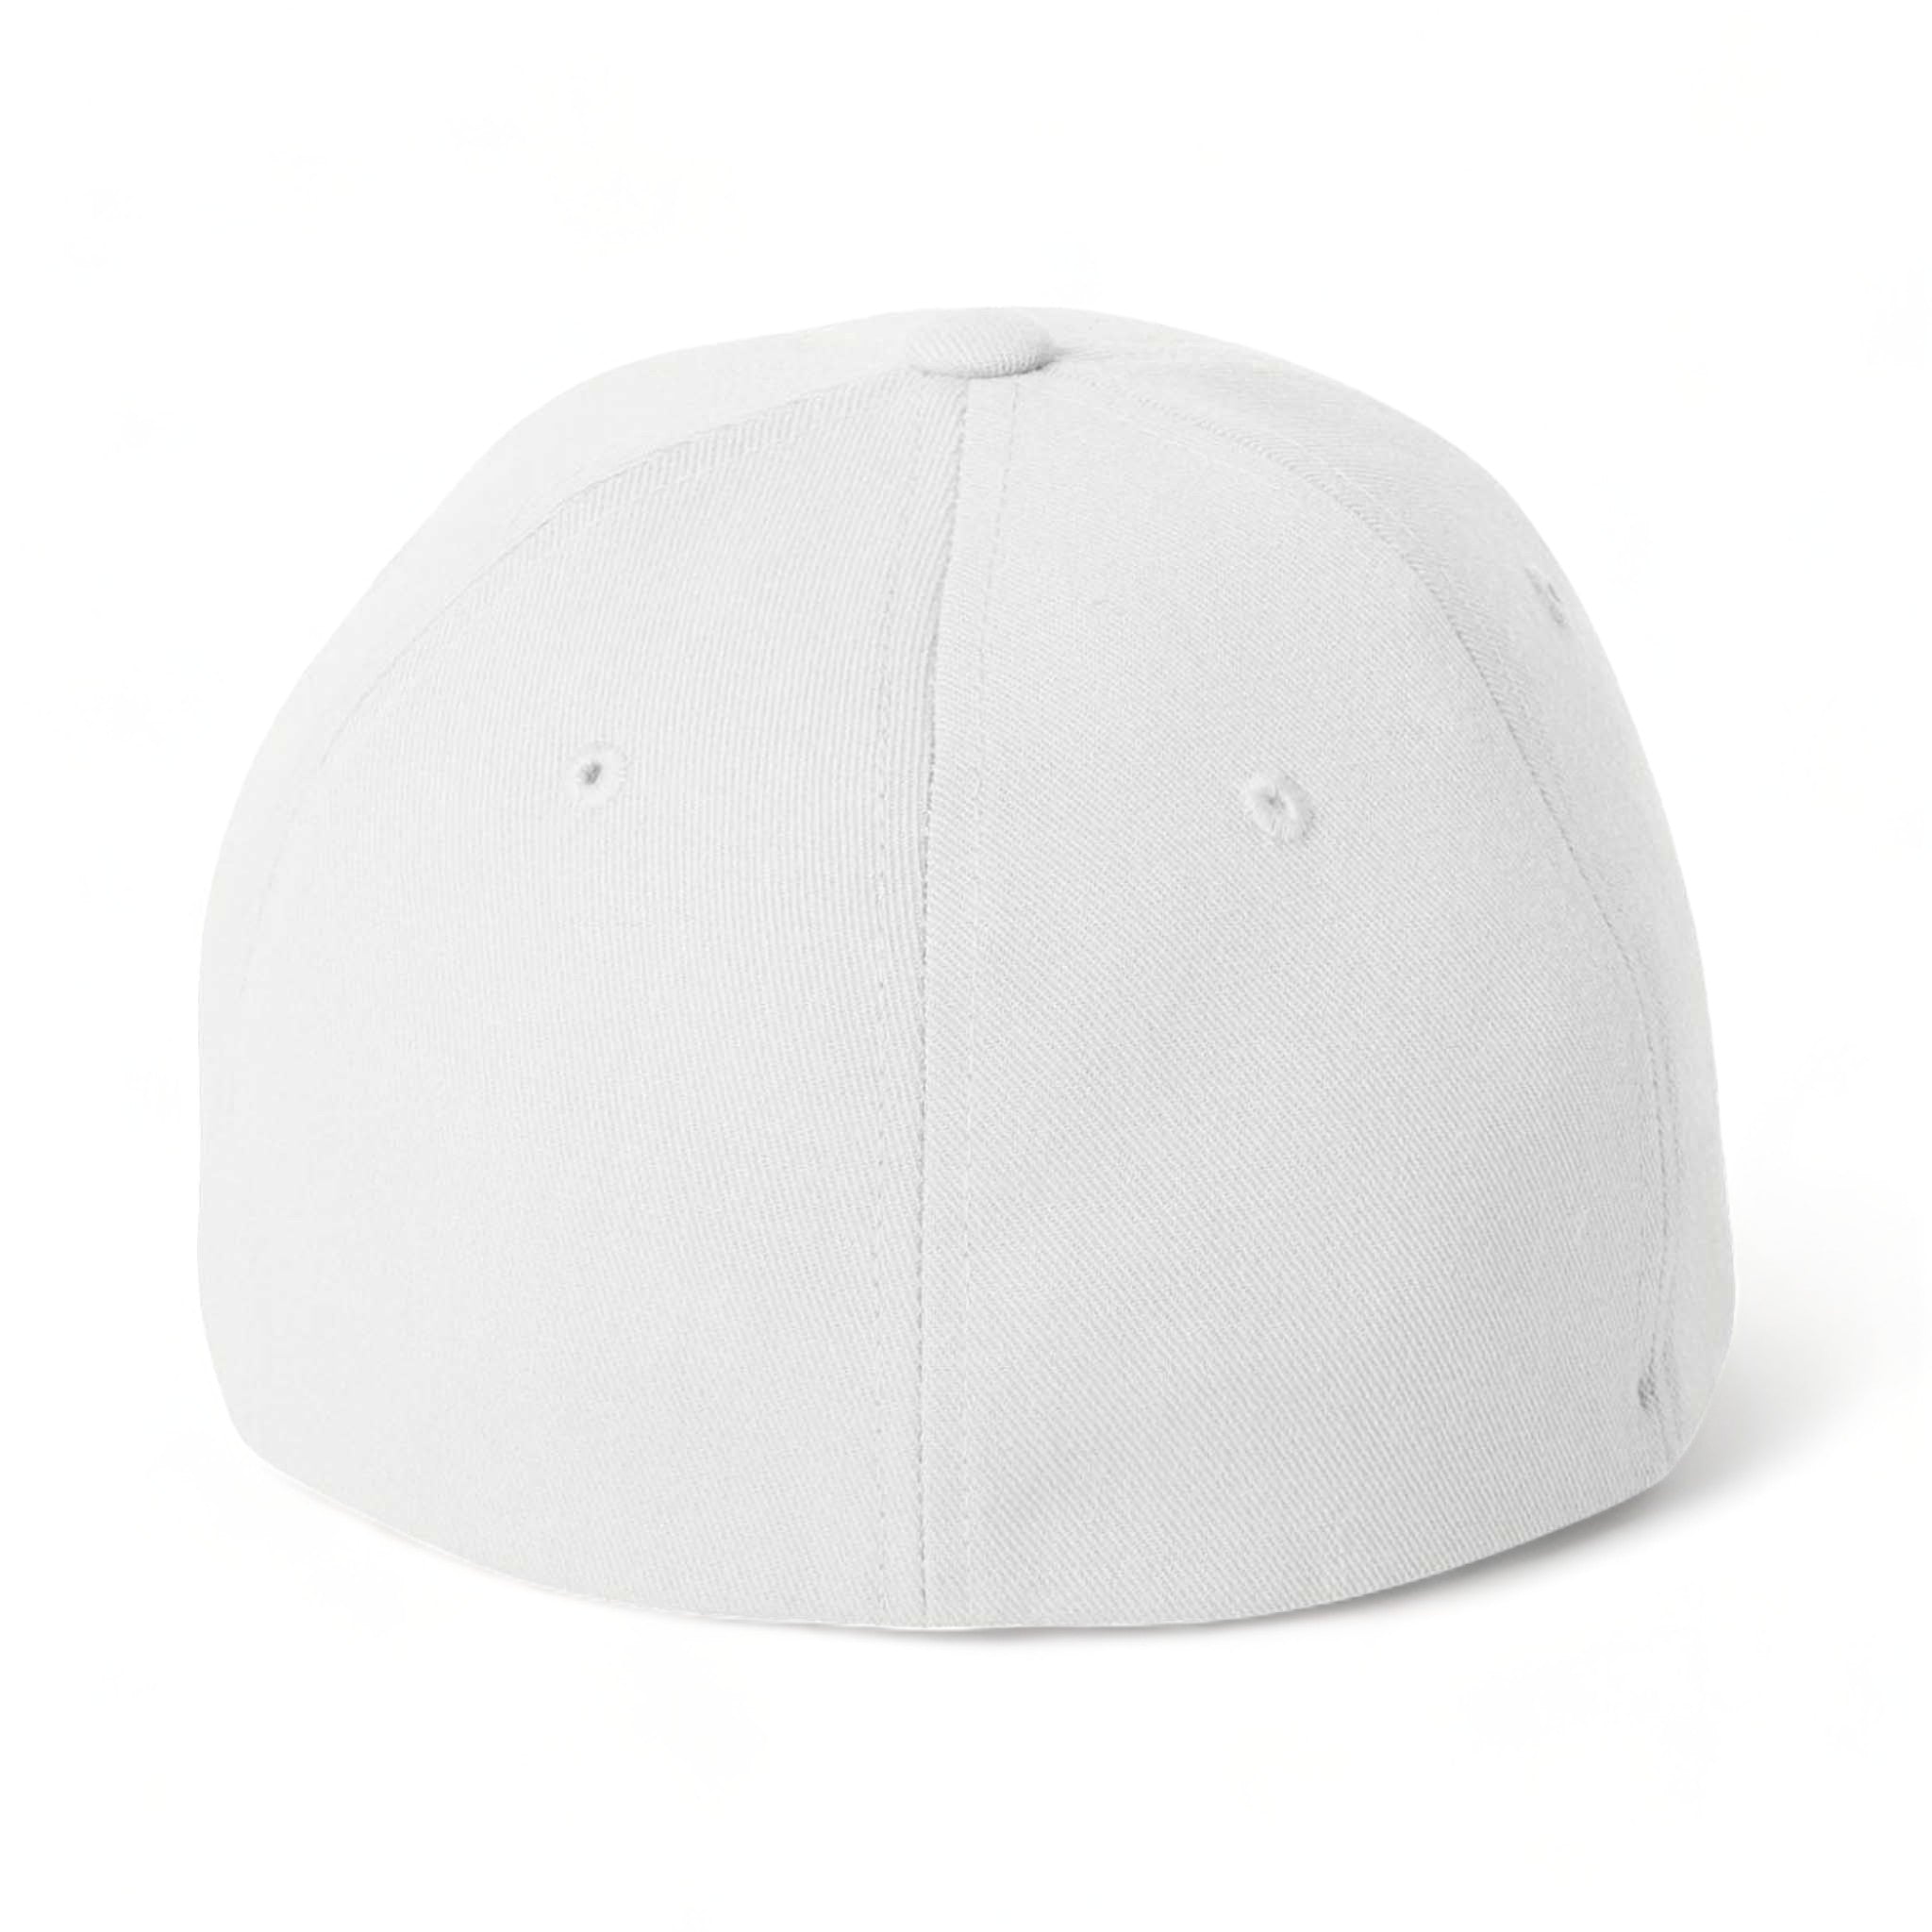 Back view of Flexfit 6580 custom hat in white